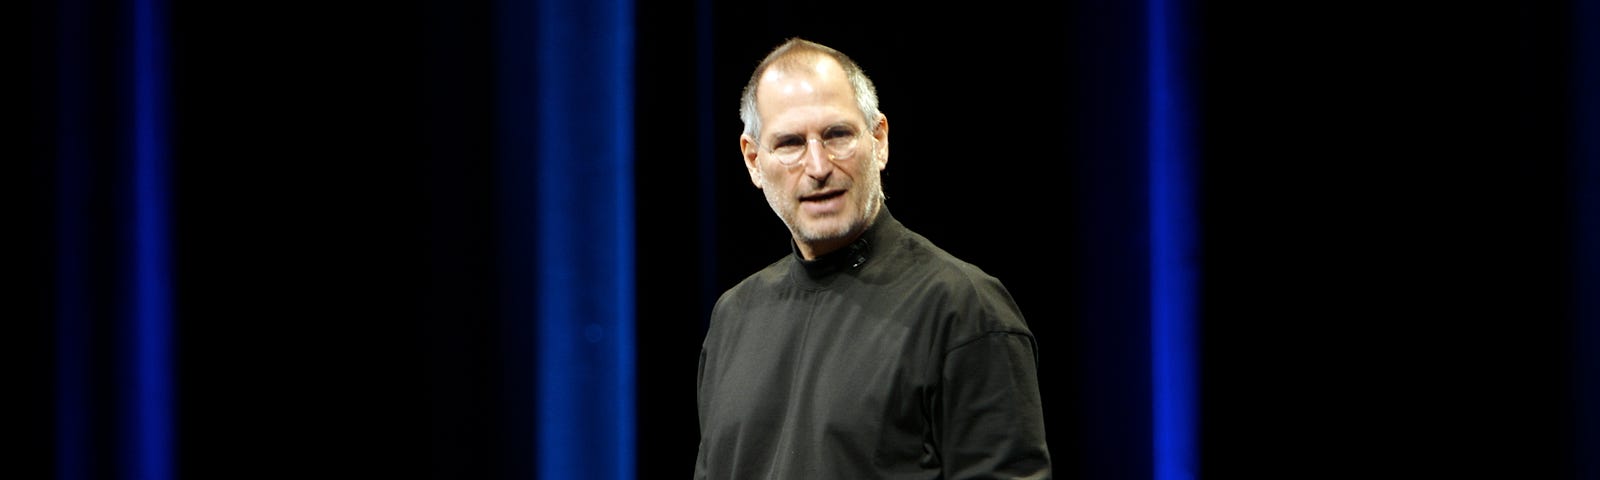 Steve Jobs. Apple. Semen retention benefits.